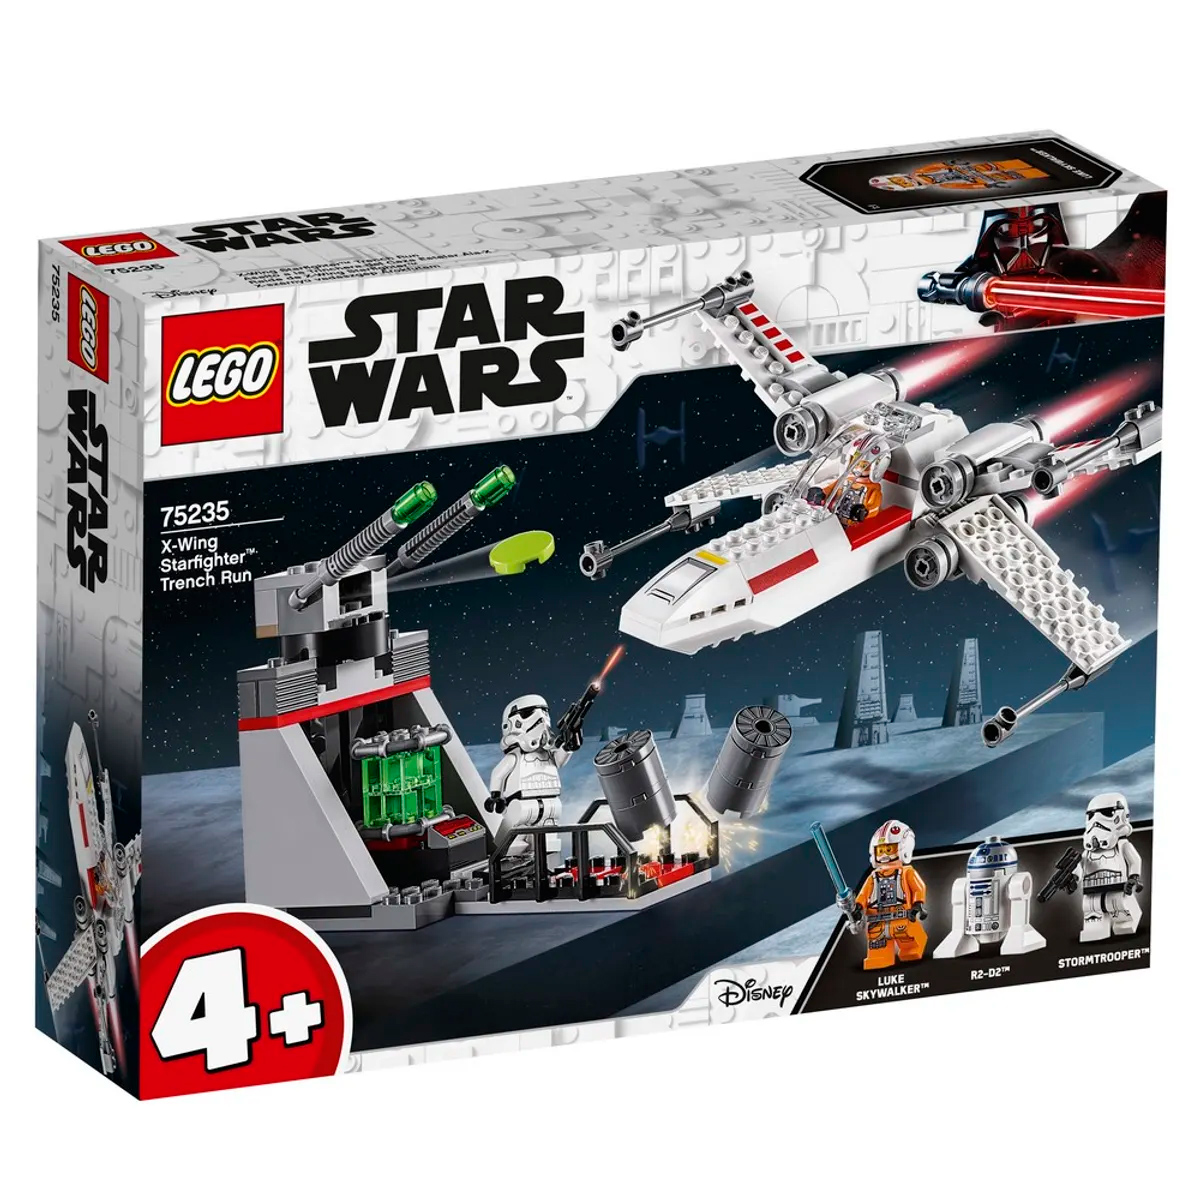 LEGO Star Wars - 4+ X-Wing Starfigher - 75235